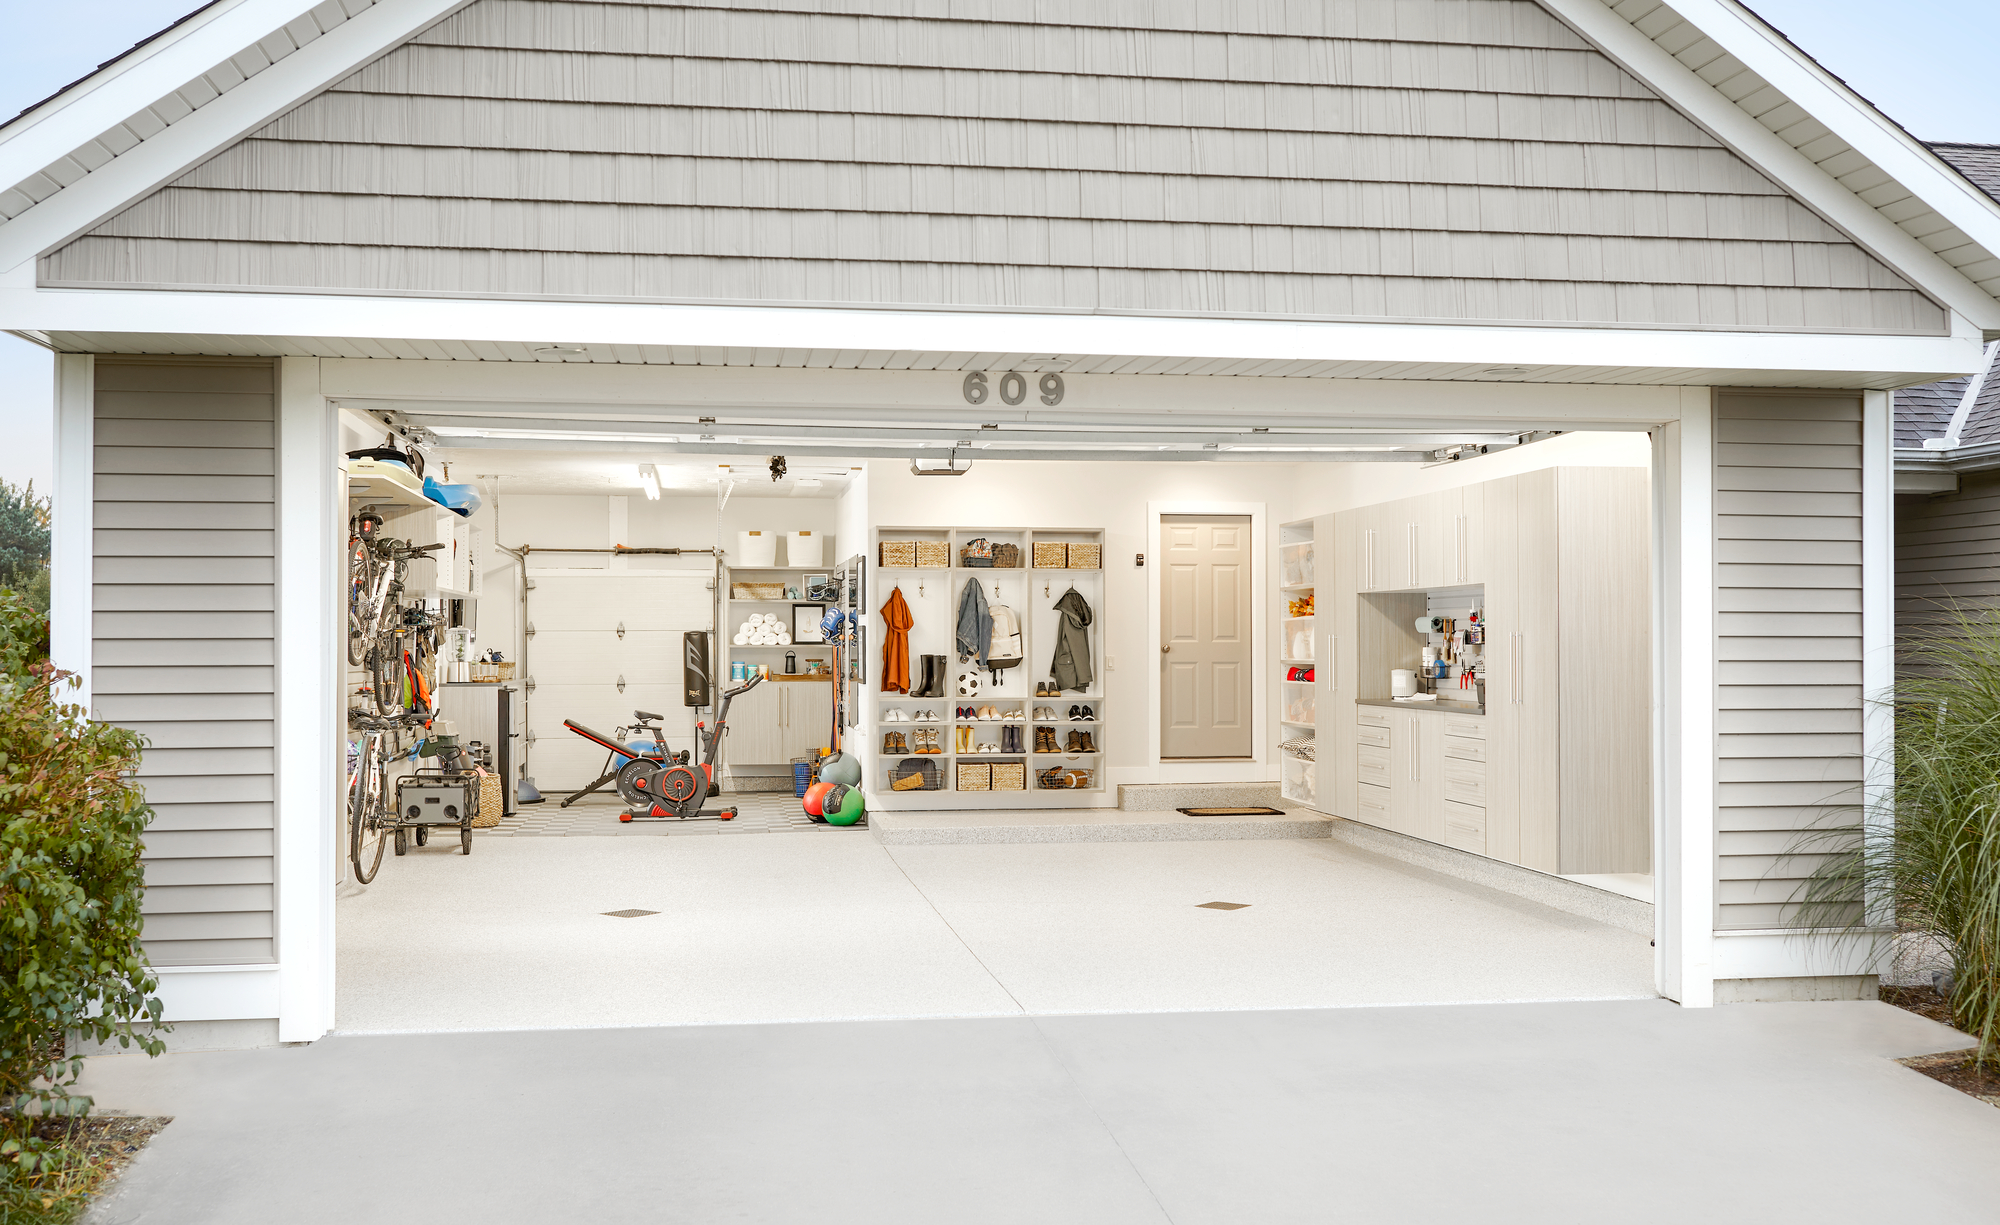 Garage Solutions Minneapolis